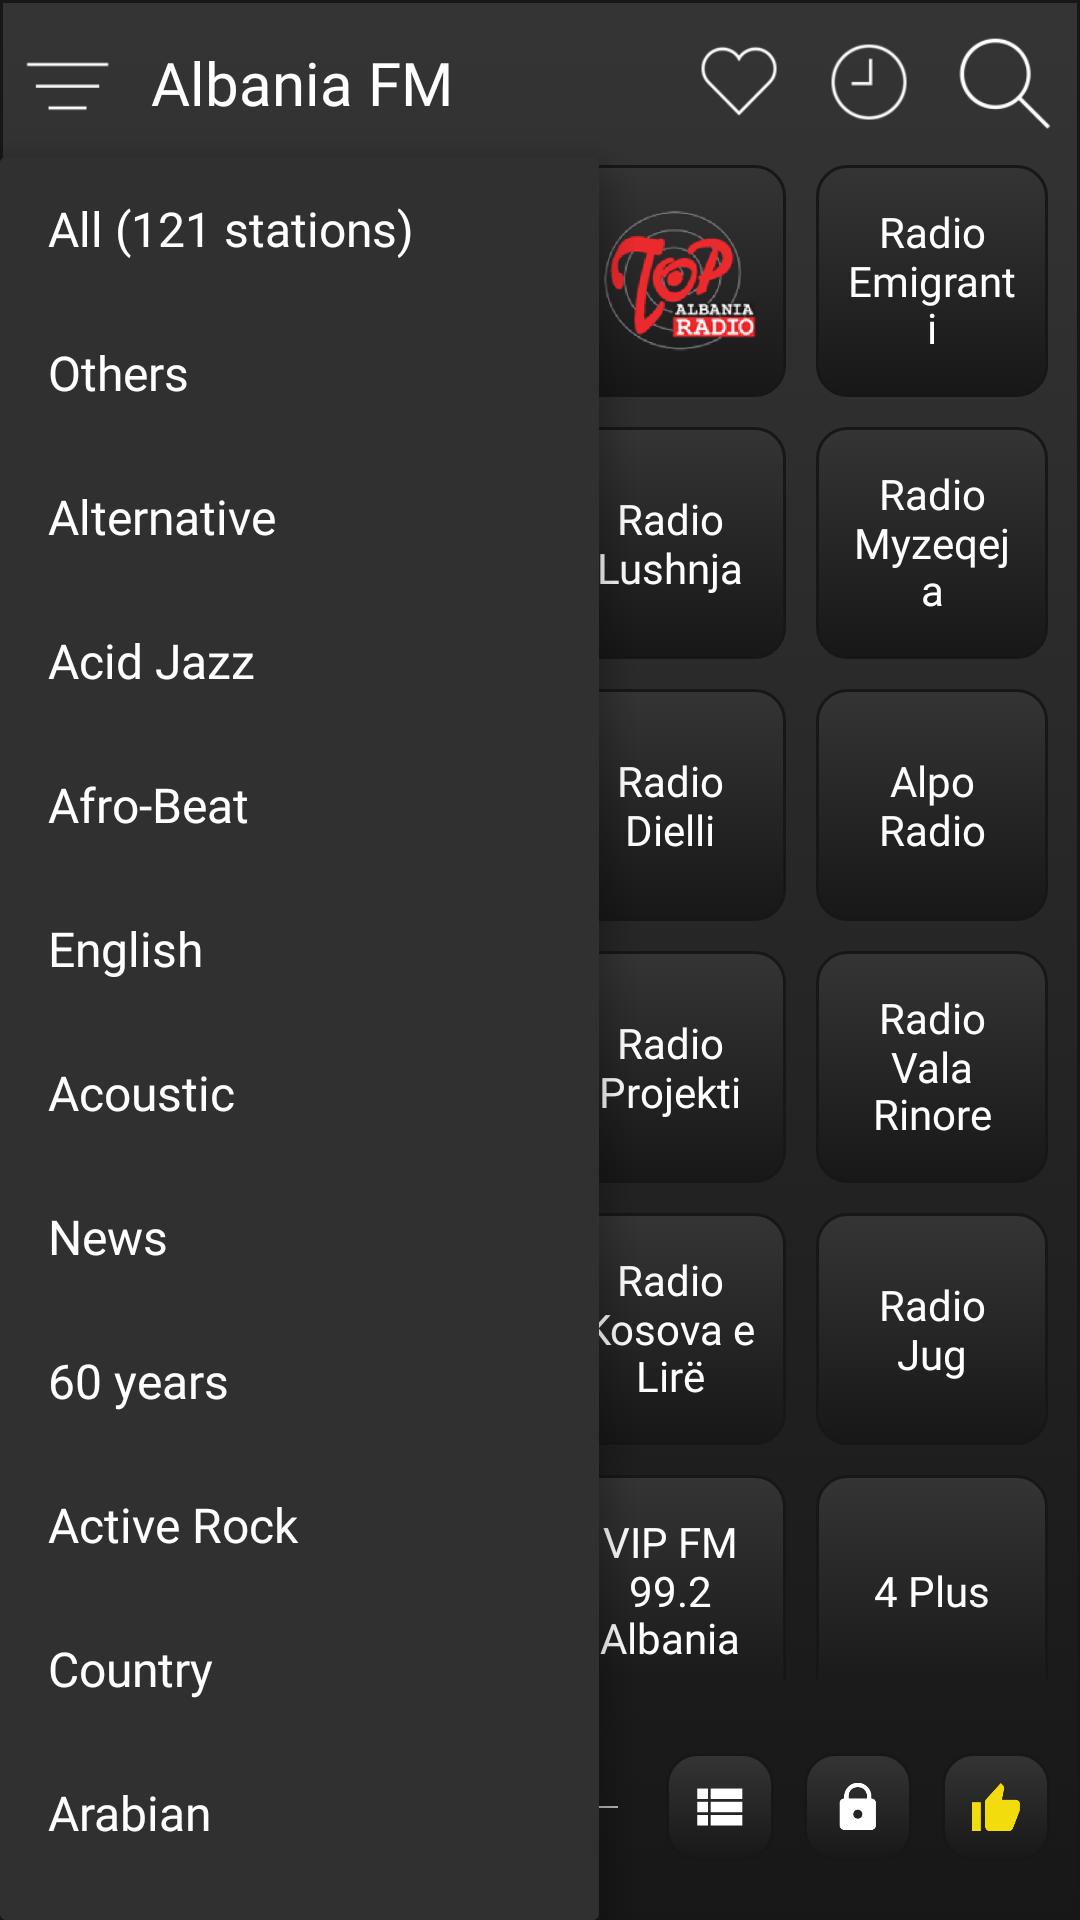 Albania Radio FM - Radio Shqip FM for Android - APK Download